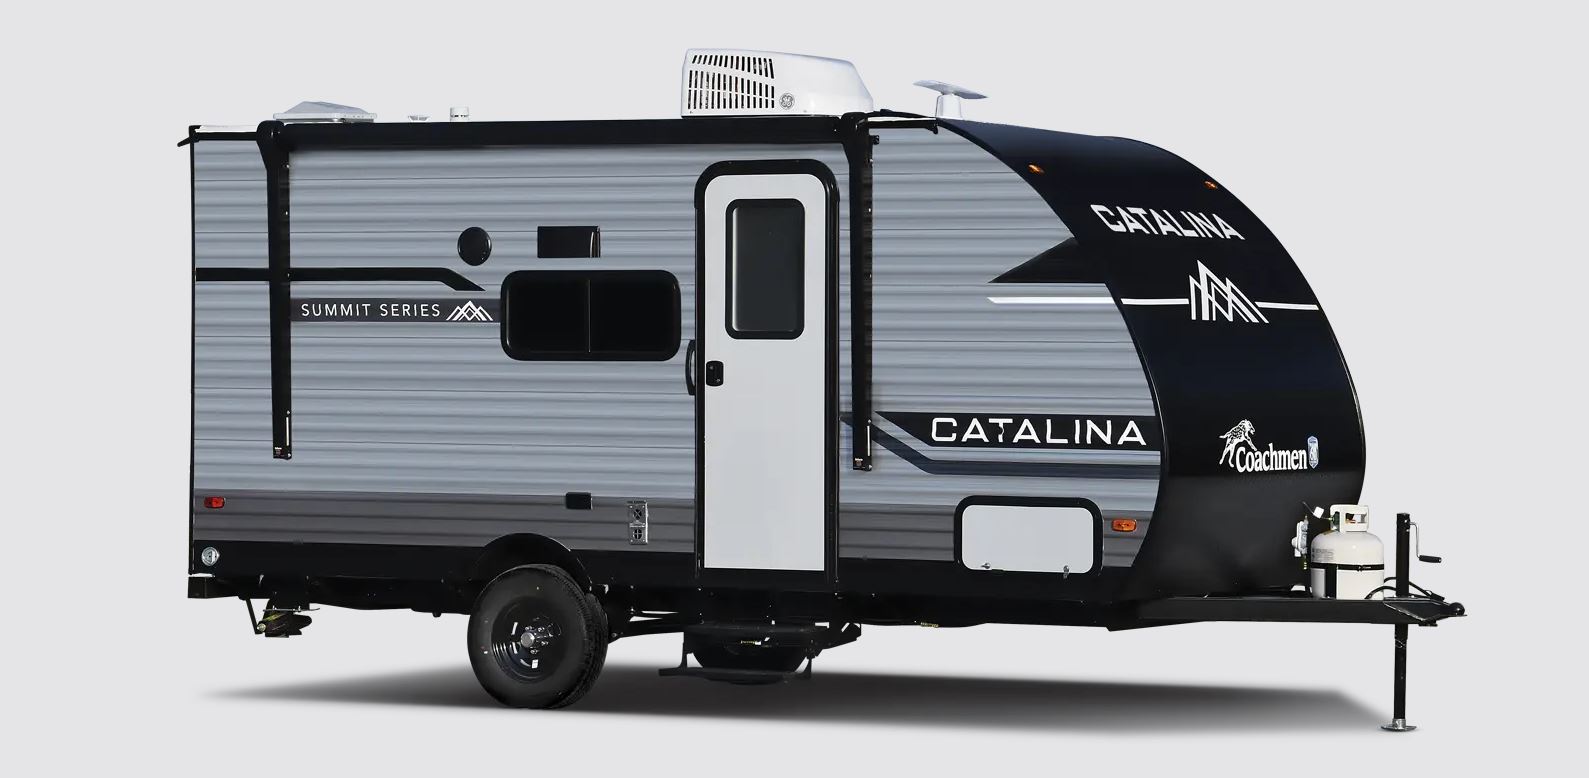 Coachmen Catalina Summit Series 7 Travel Trailer